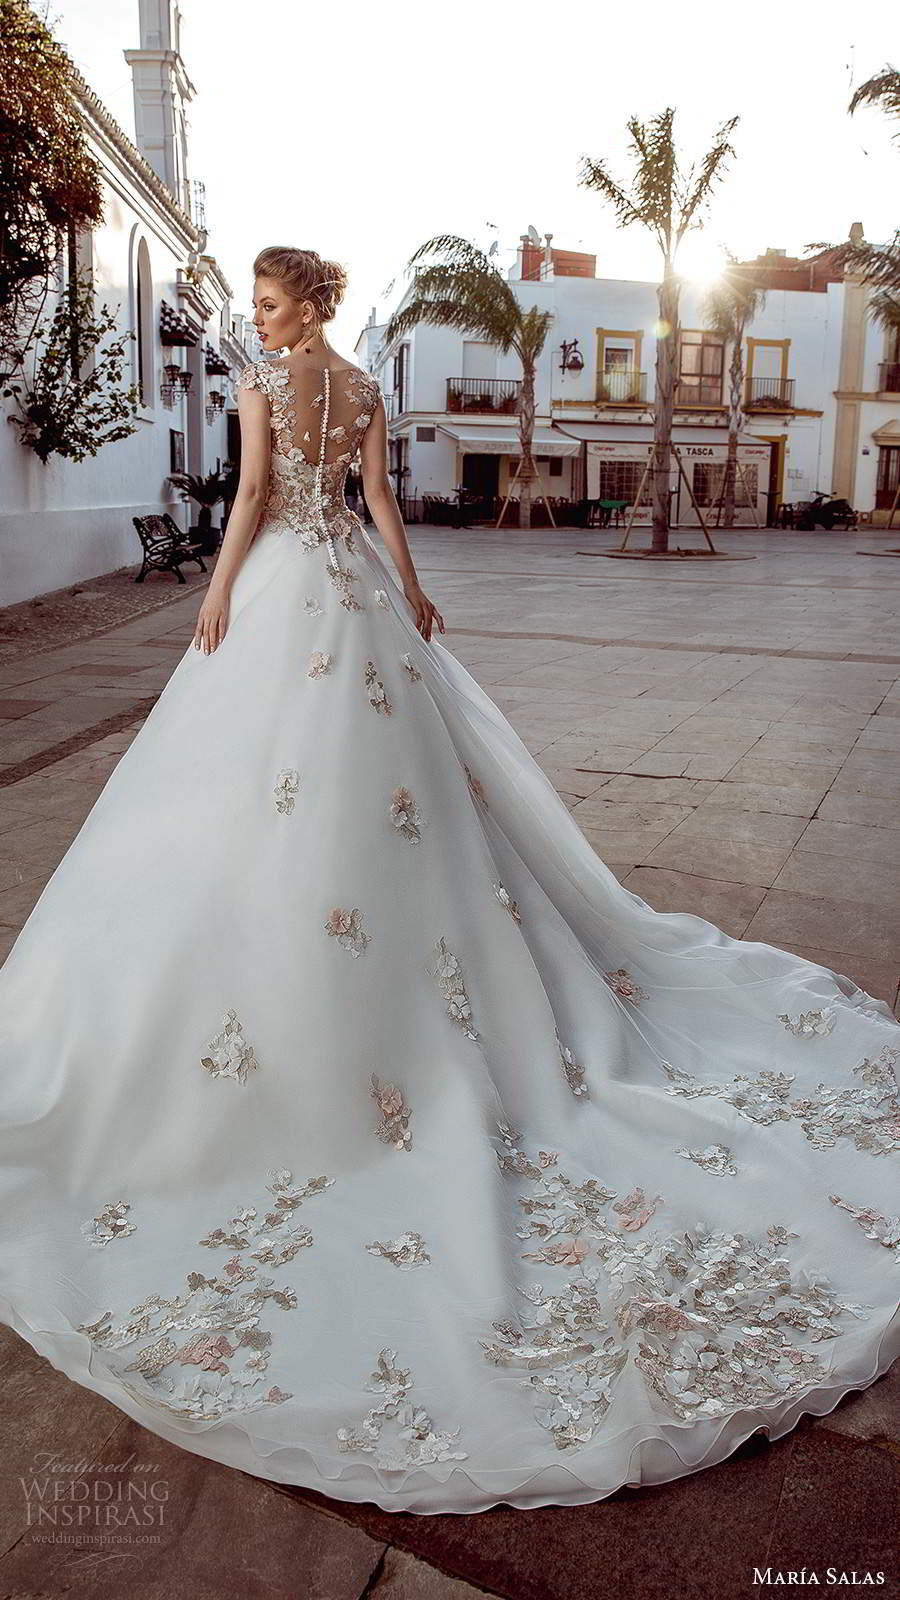 maria salas 2019 bridal cap sleeves illusion bateau neckline heavily embellished bodice a line ball gown wedding dress chapel train (21) bv